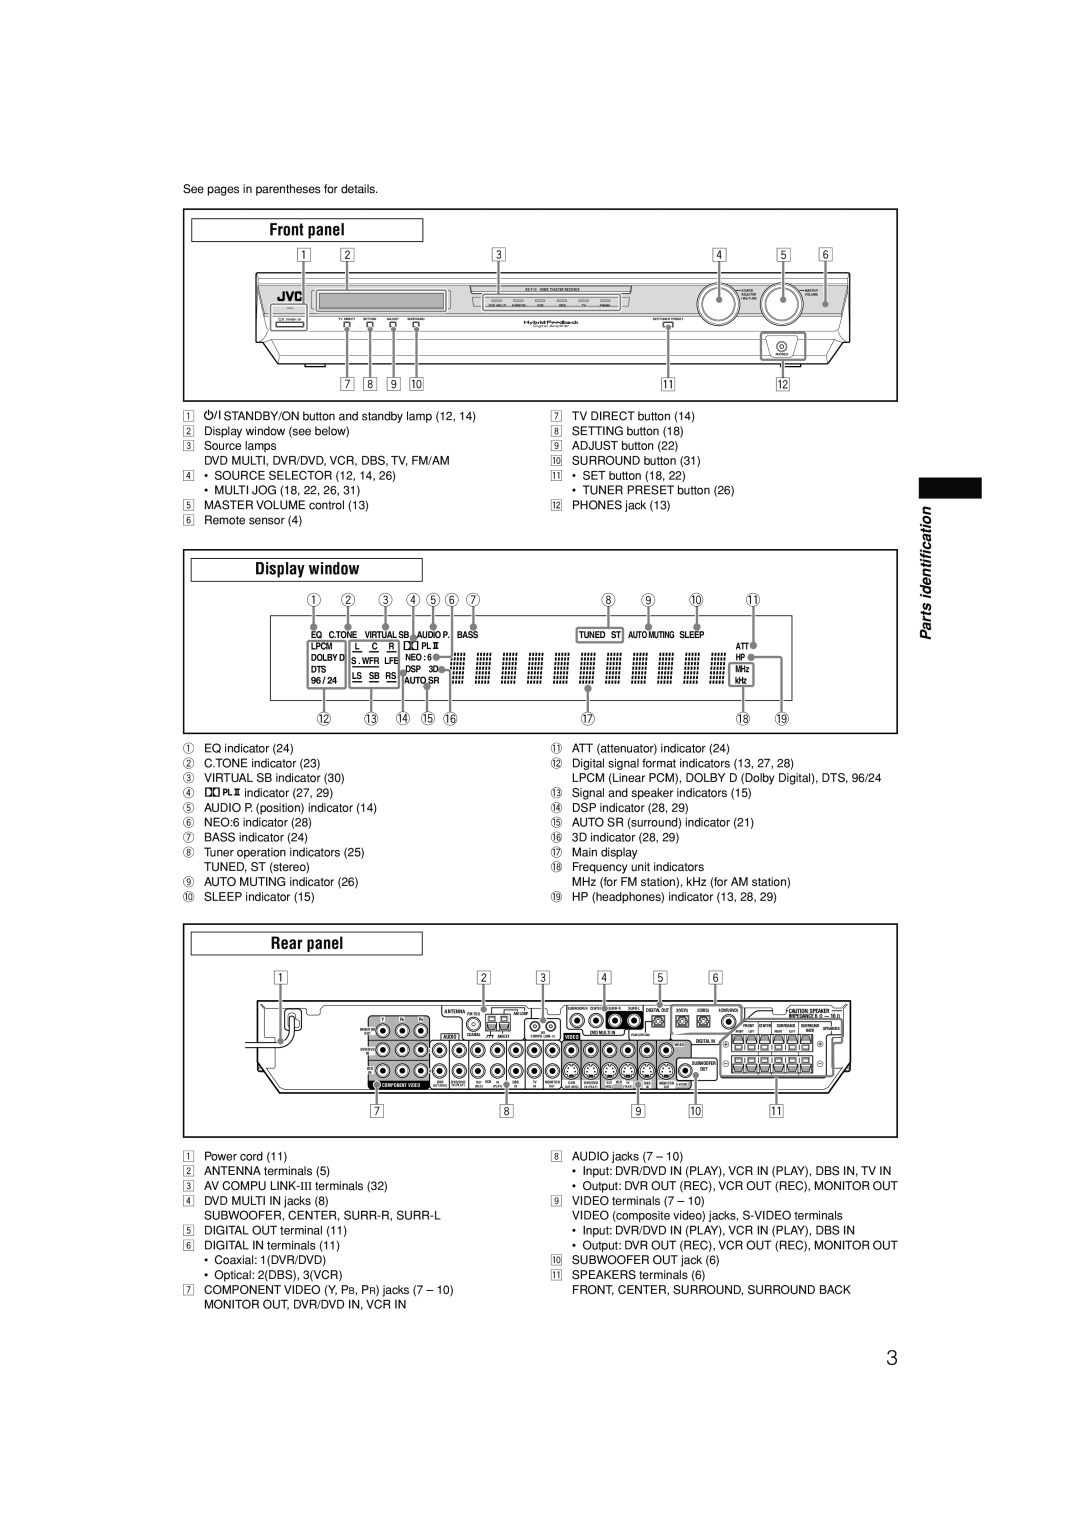 JVC RX-F10S manual 7 8 9 p, 3 4 5 6, Parts identification 